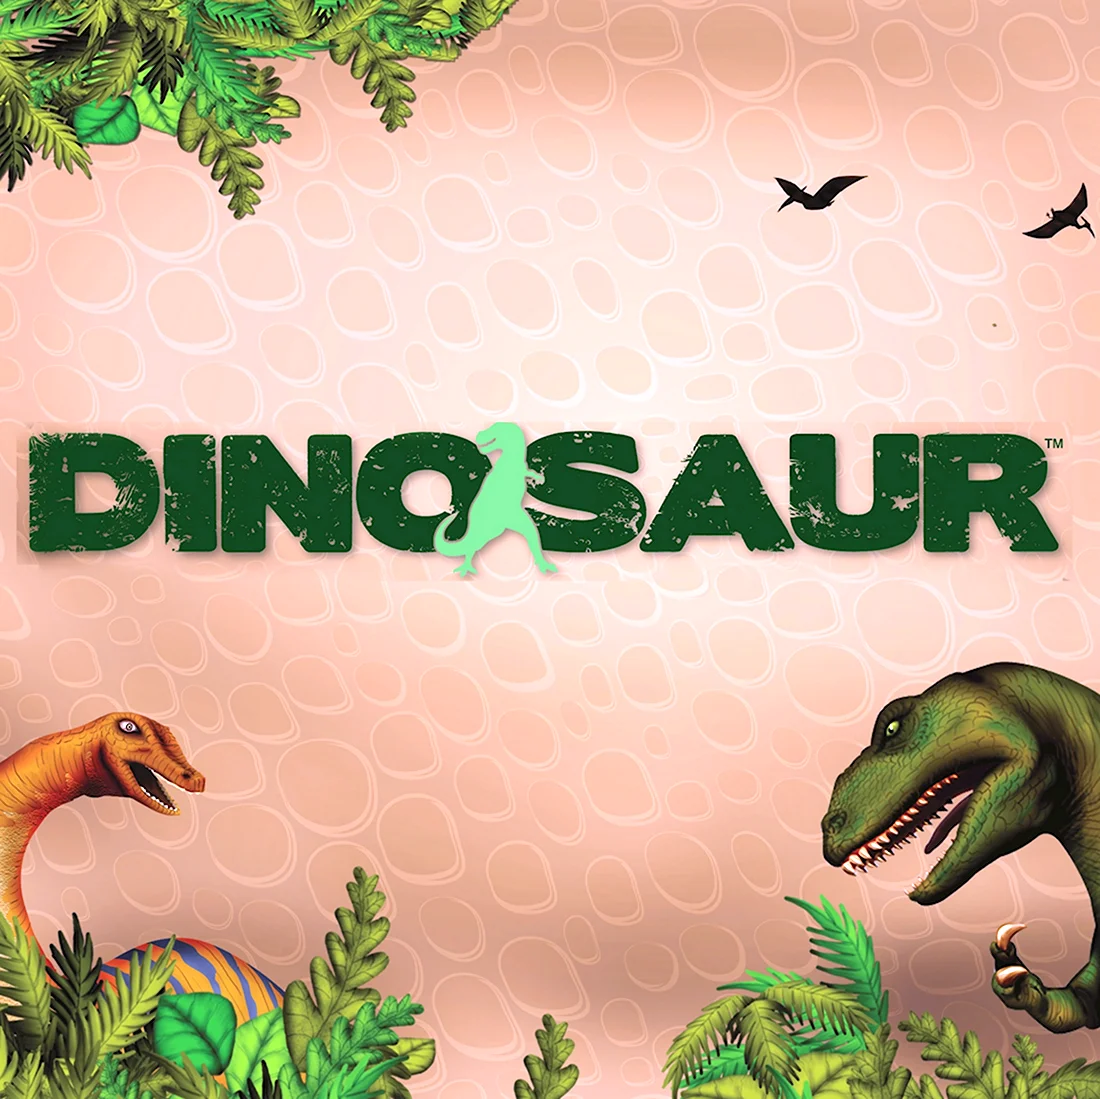 Динозавр логотип